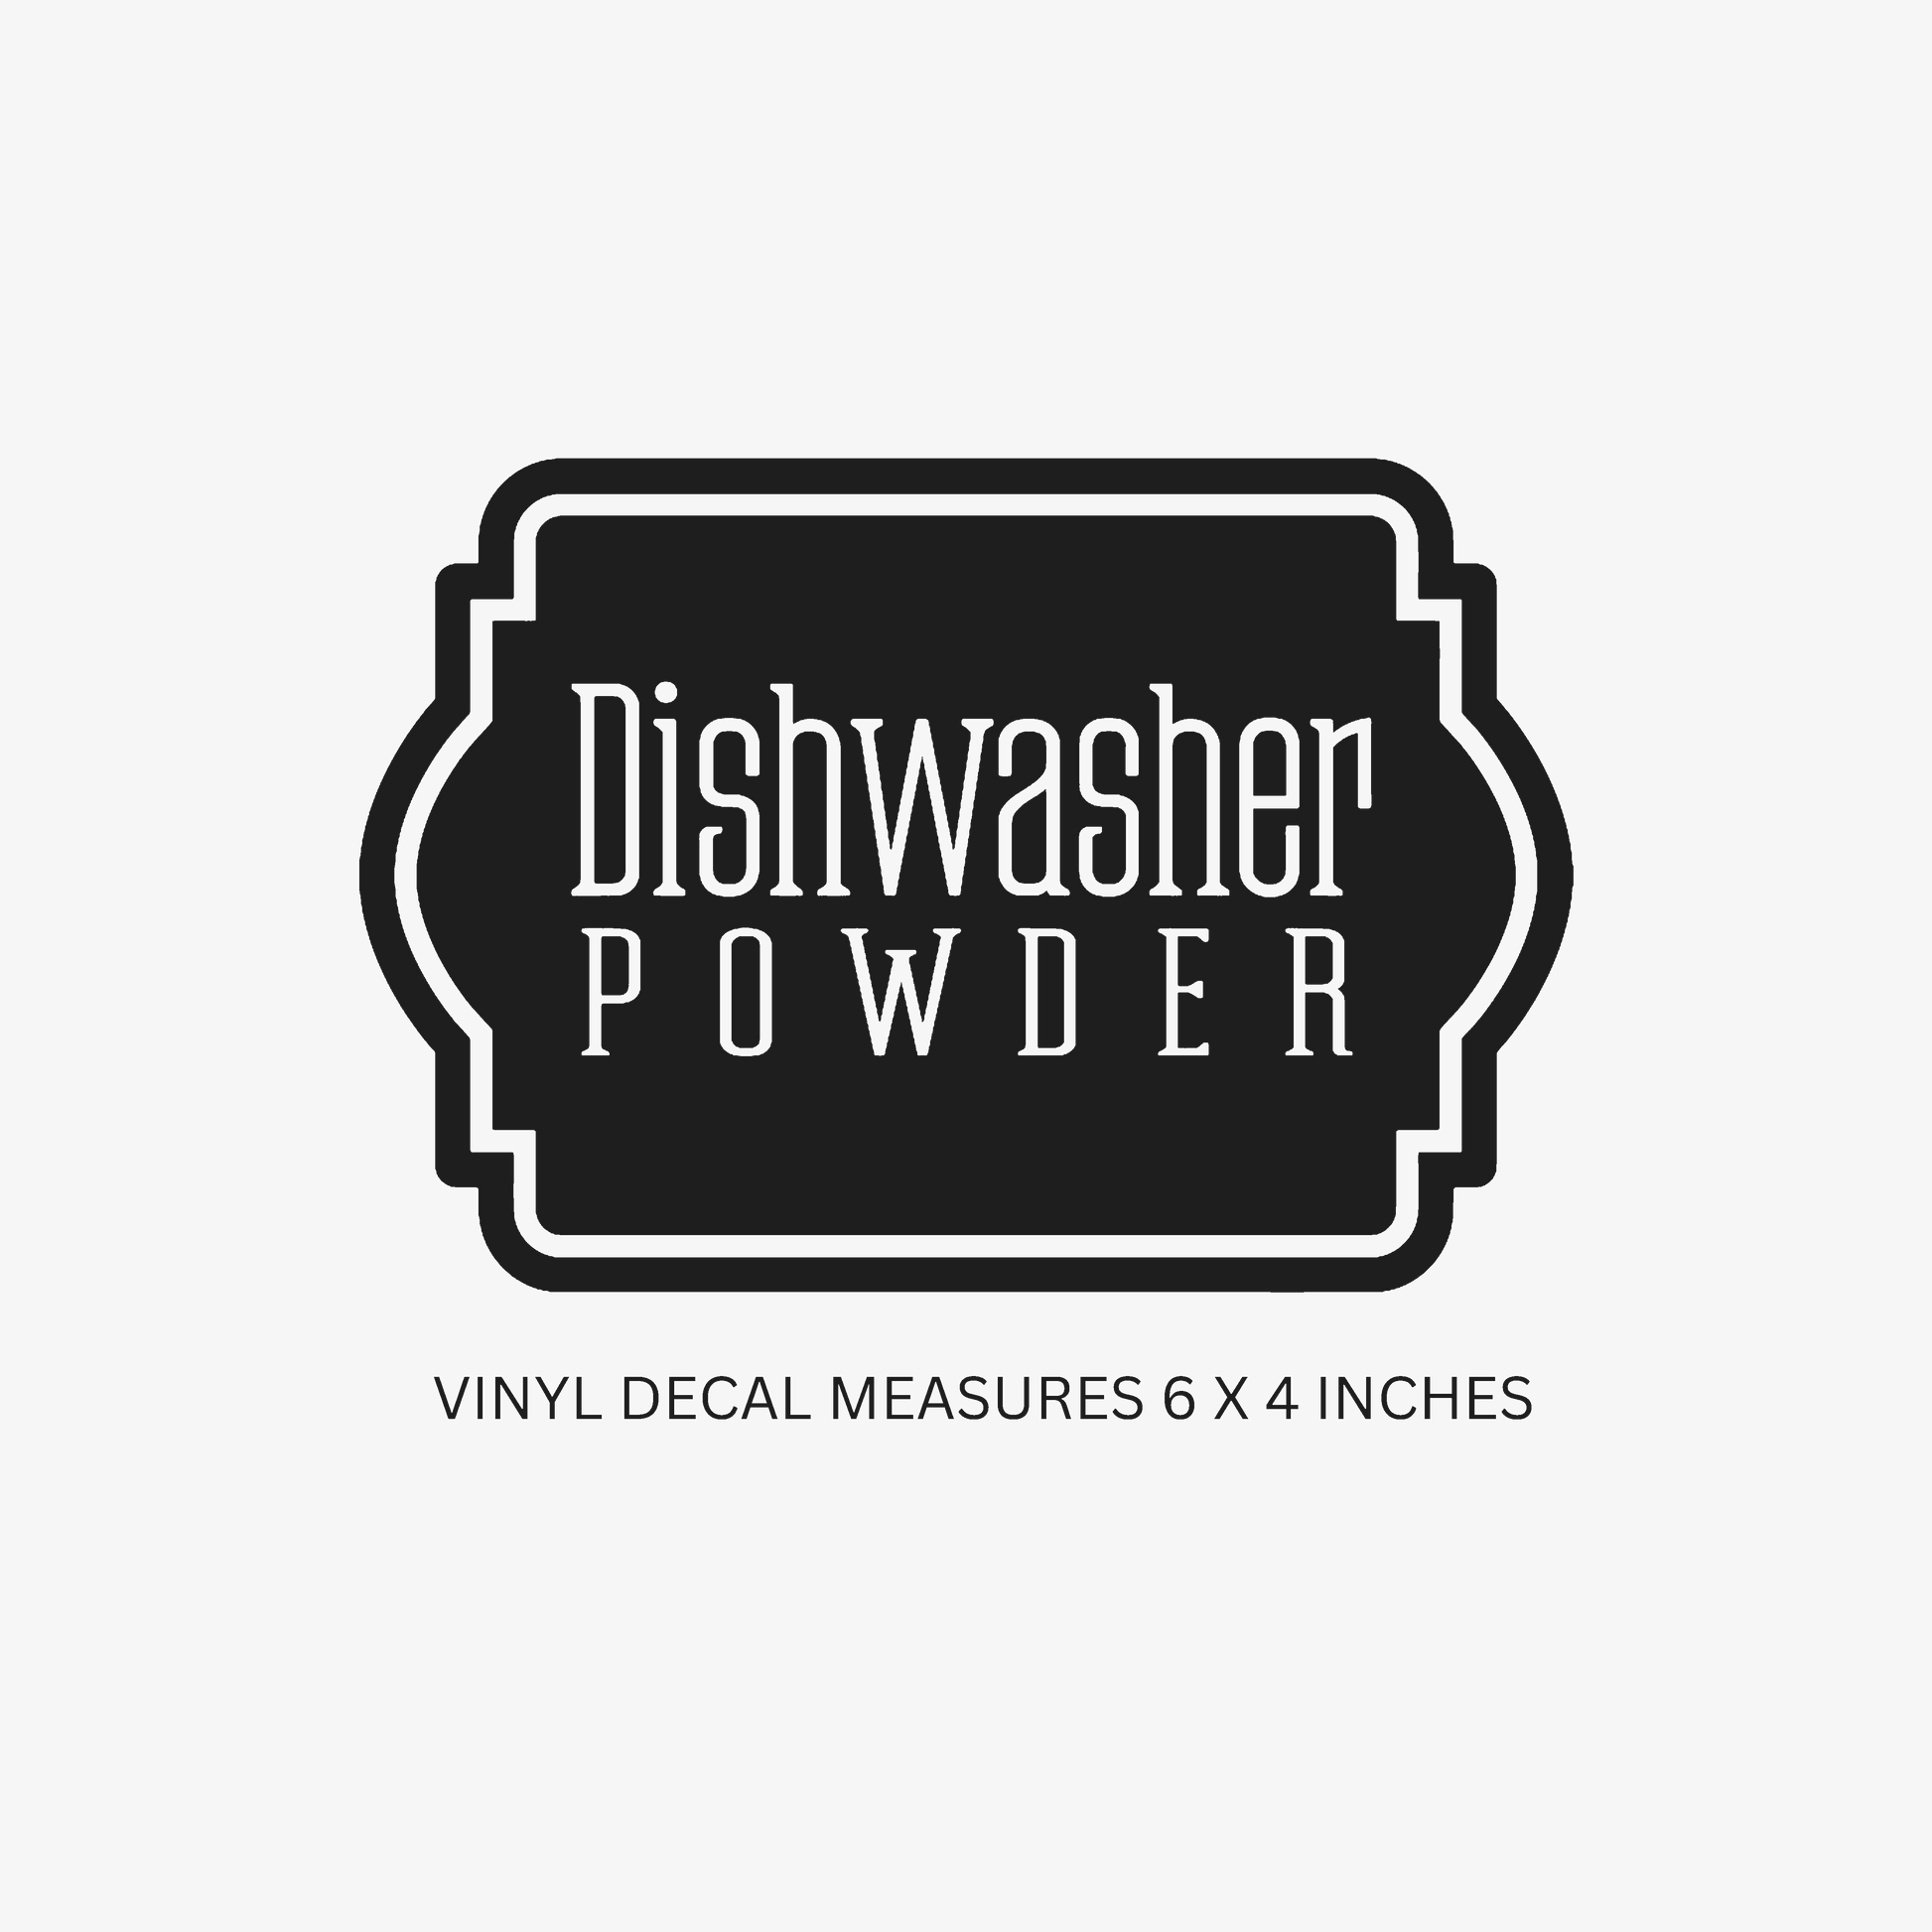 Dishwasher Powder Decal